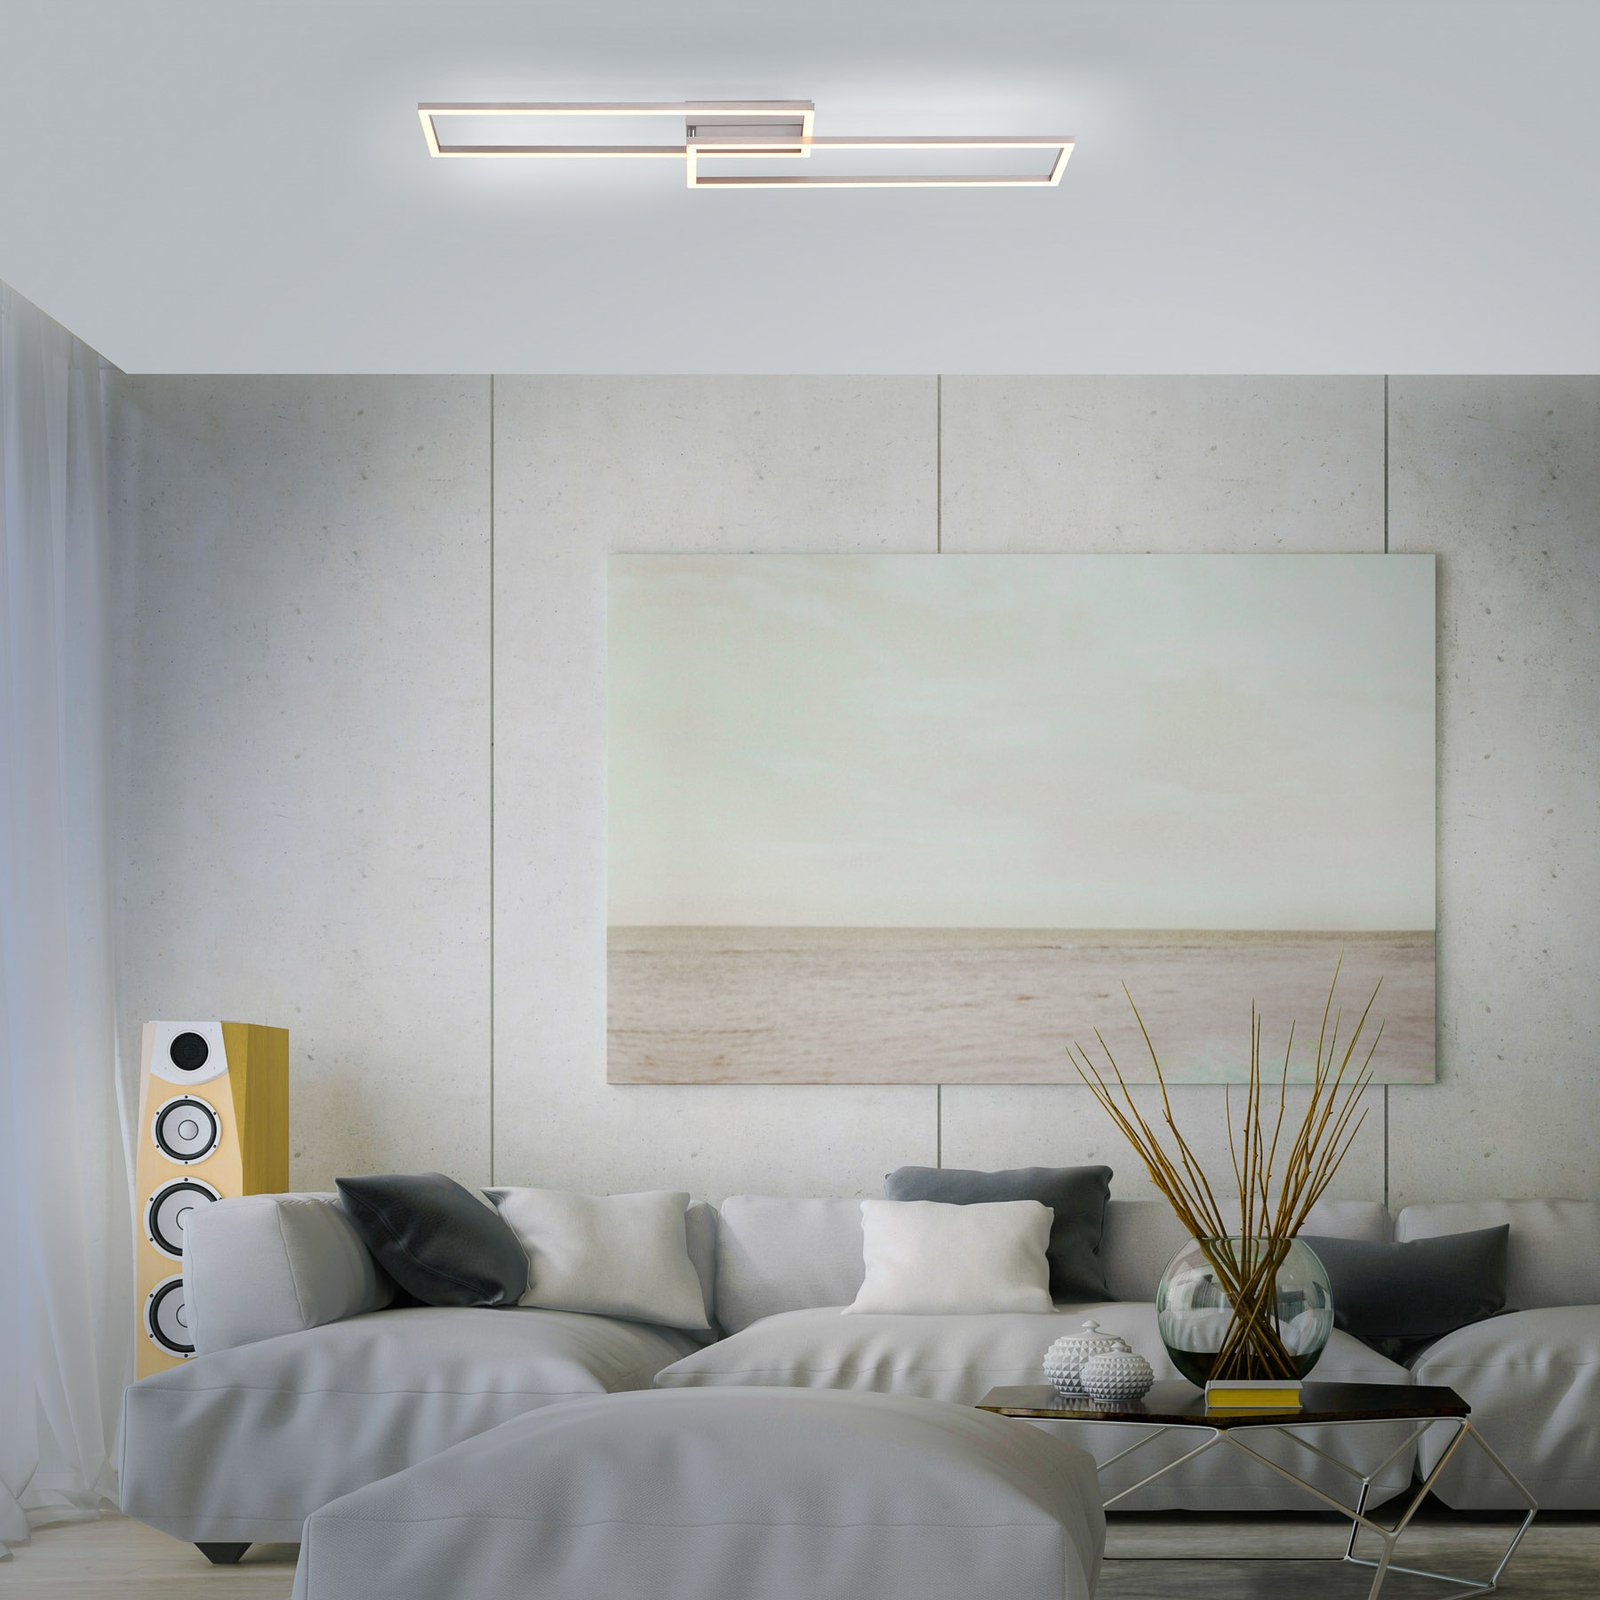 LED stropné svietidlo Iven, tlmené, oceľ, 92,4x22cm